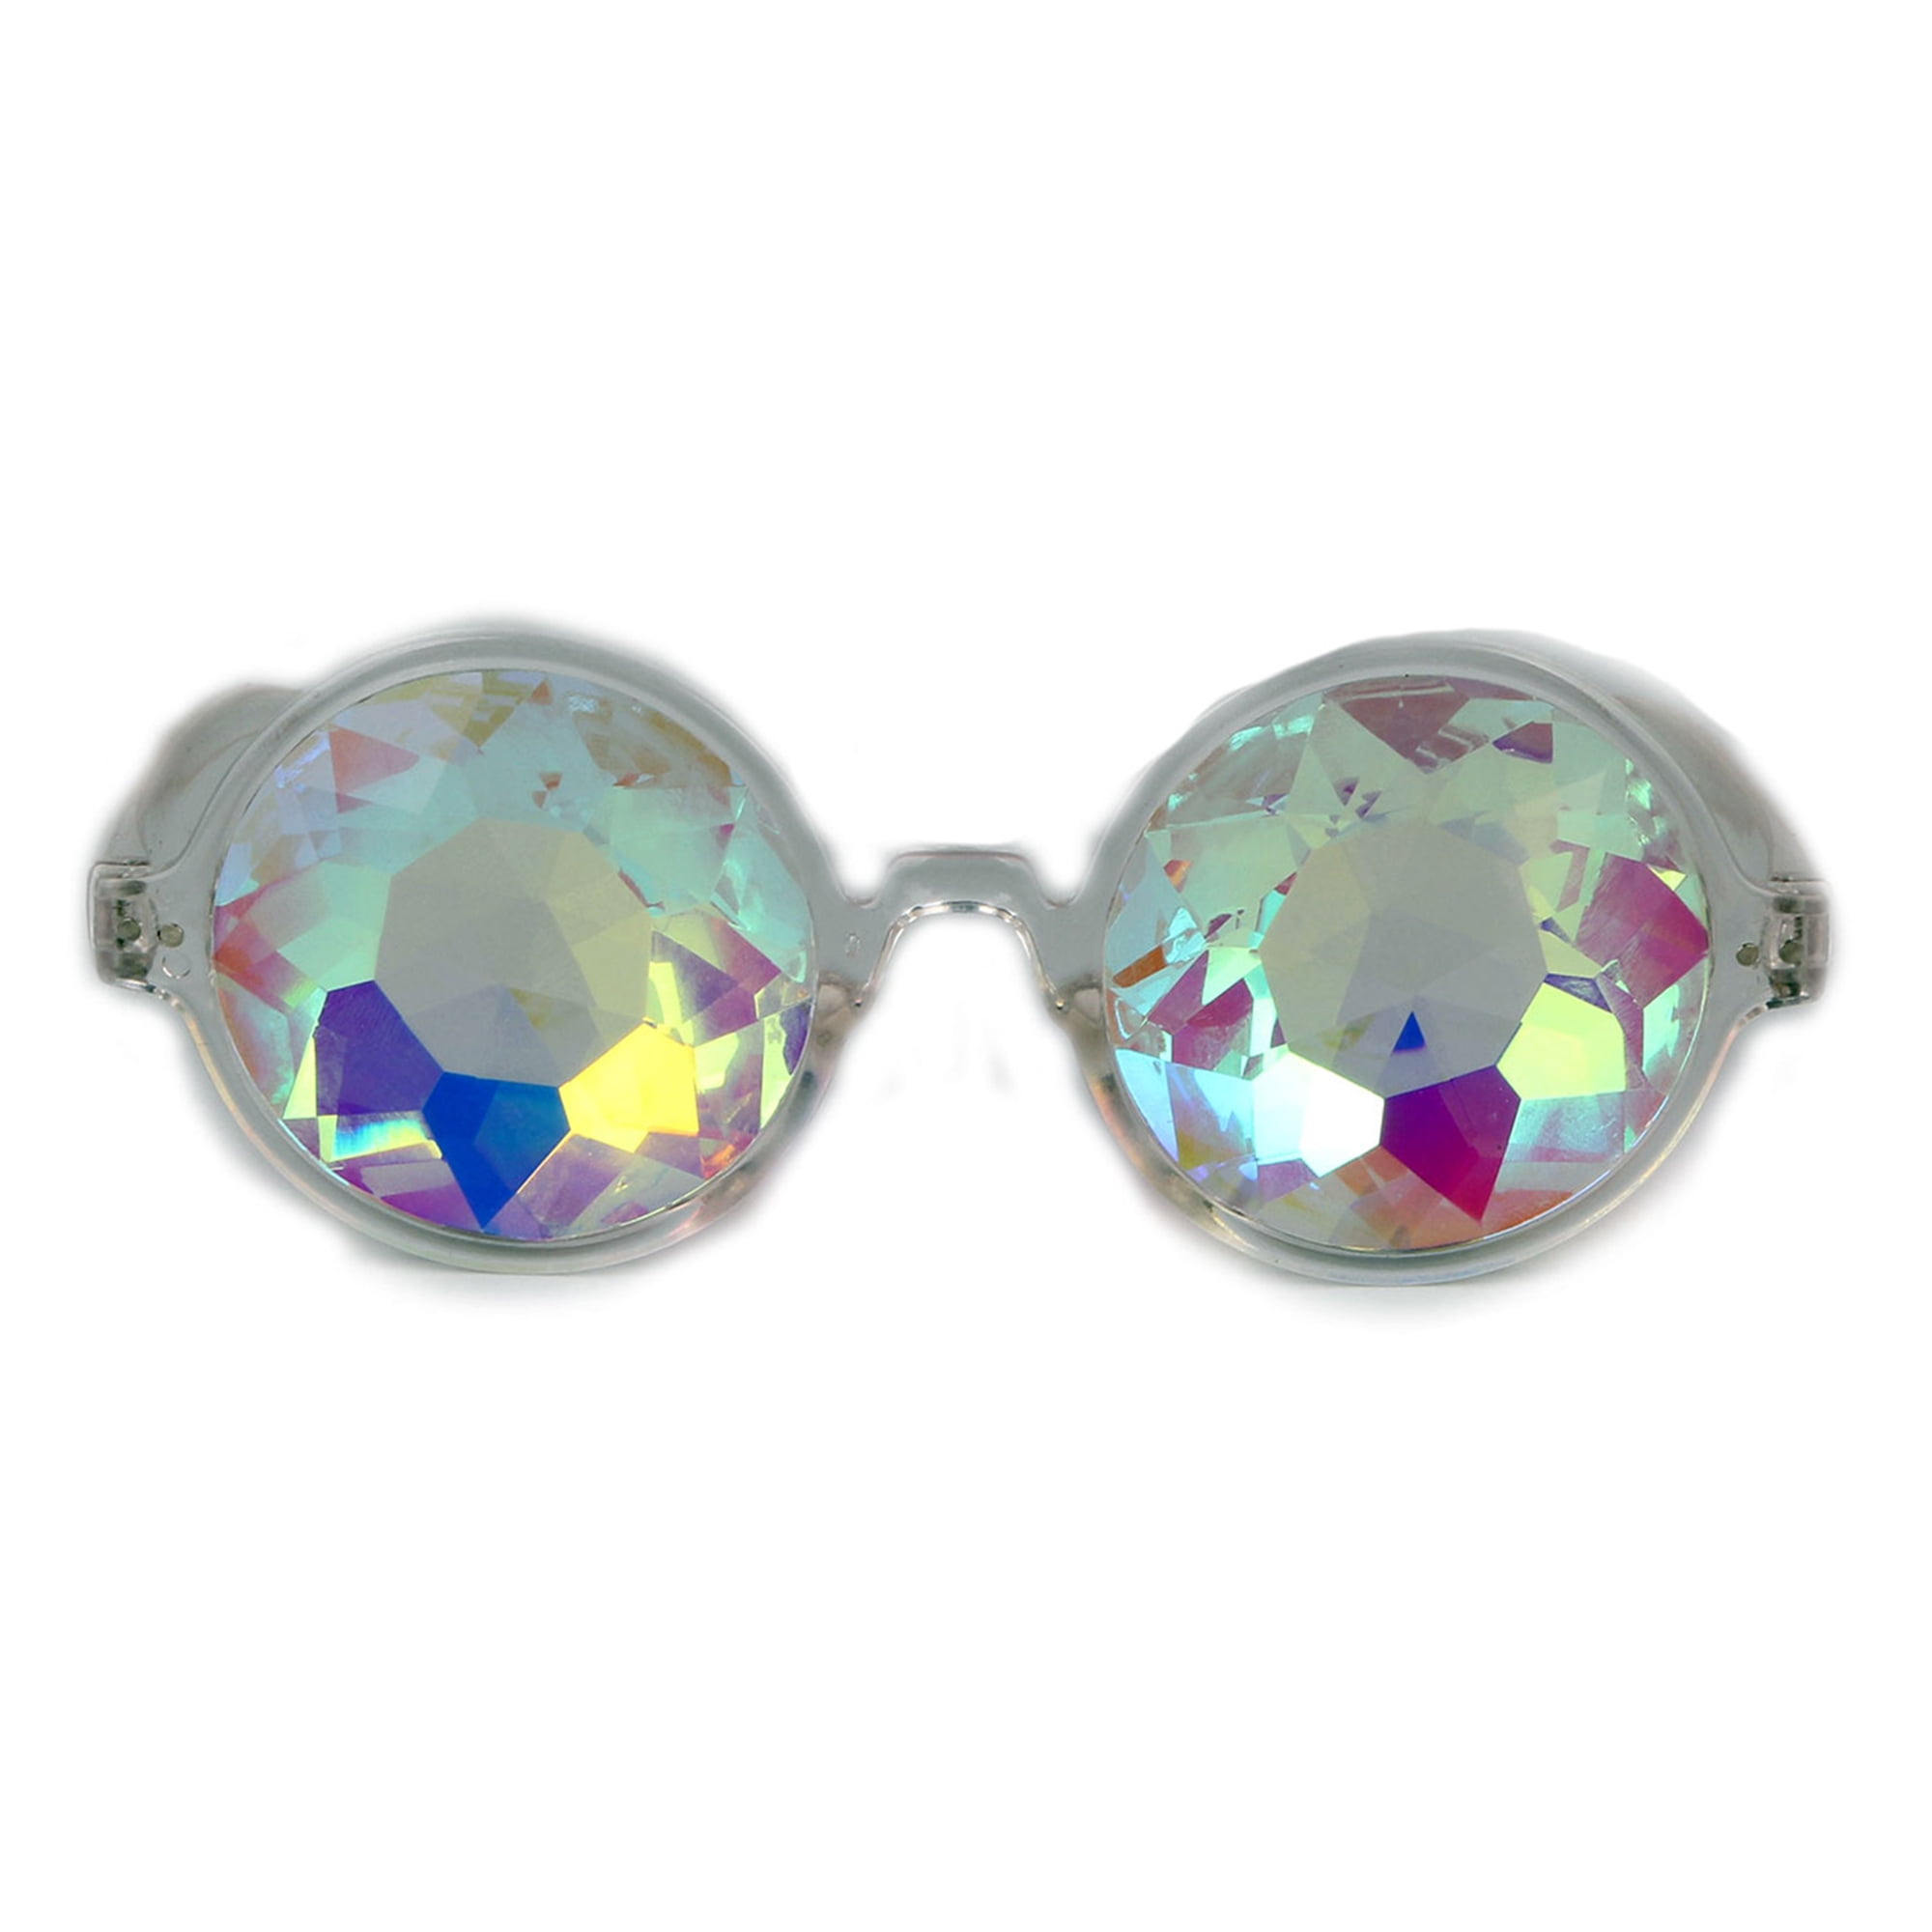 Kaleidoscope Goggles Diffraction Rave EDM Eyewear Prism Steampunk Real Crystal Rainbow Lenses Glasses 